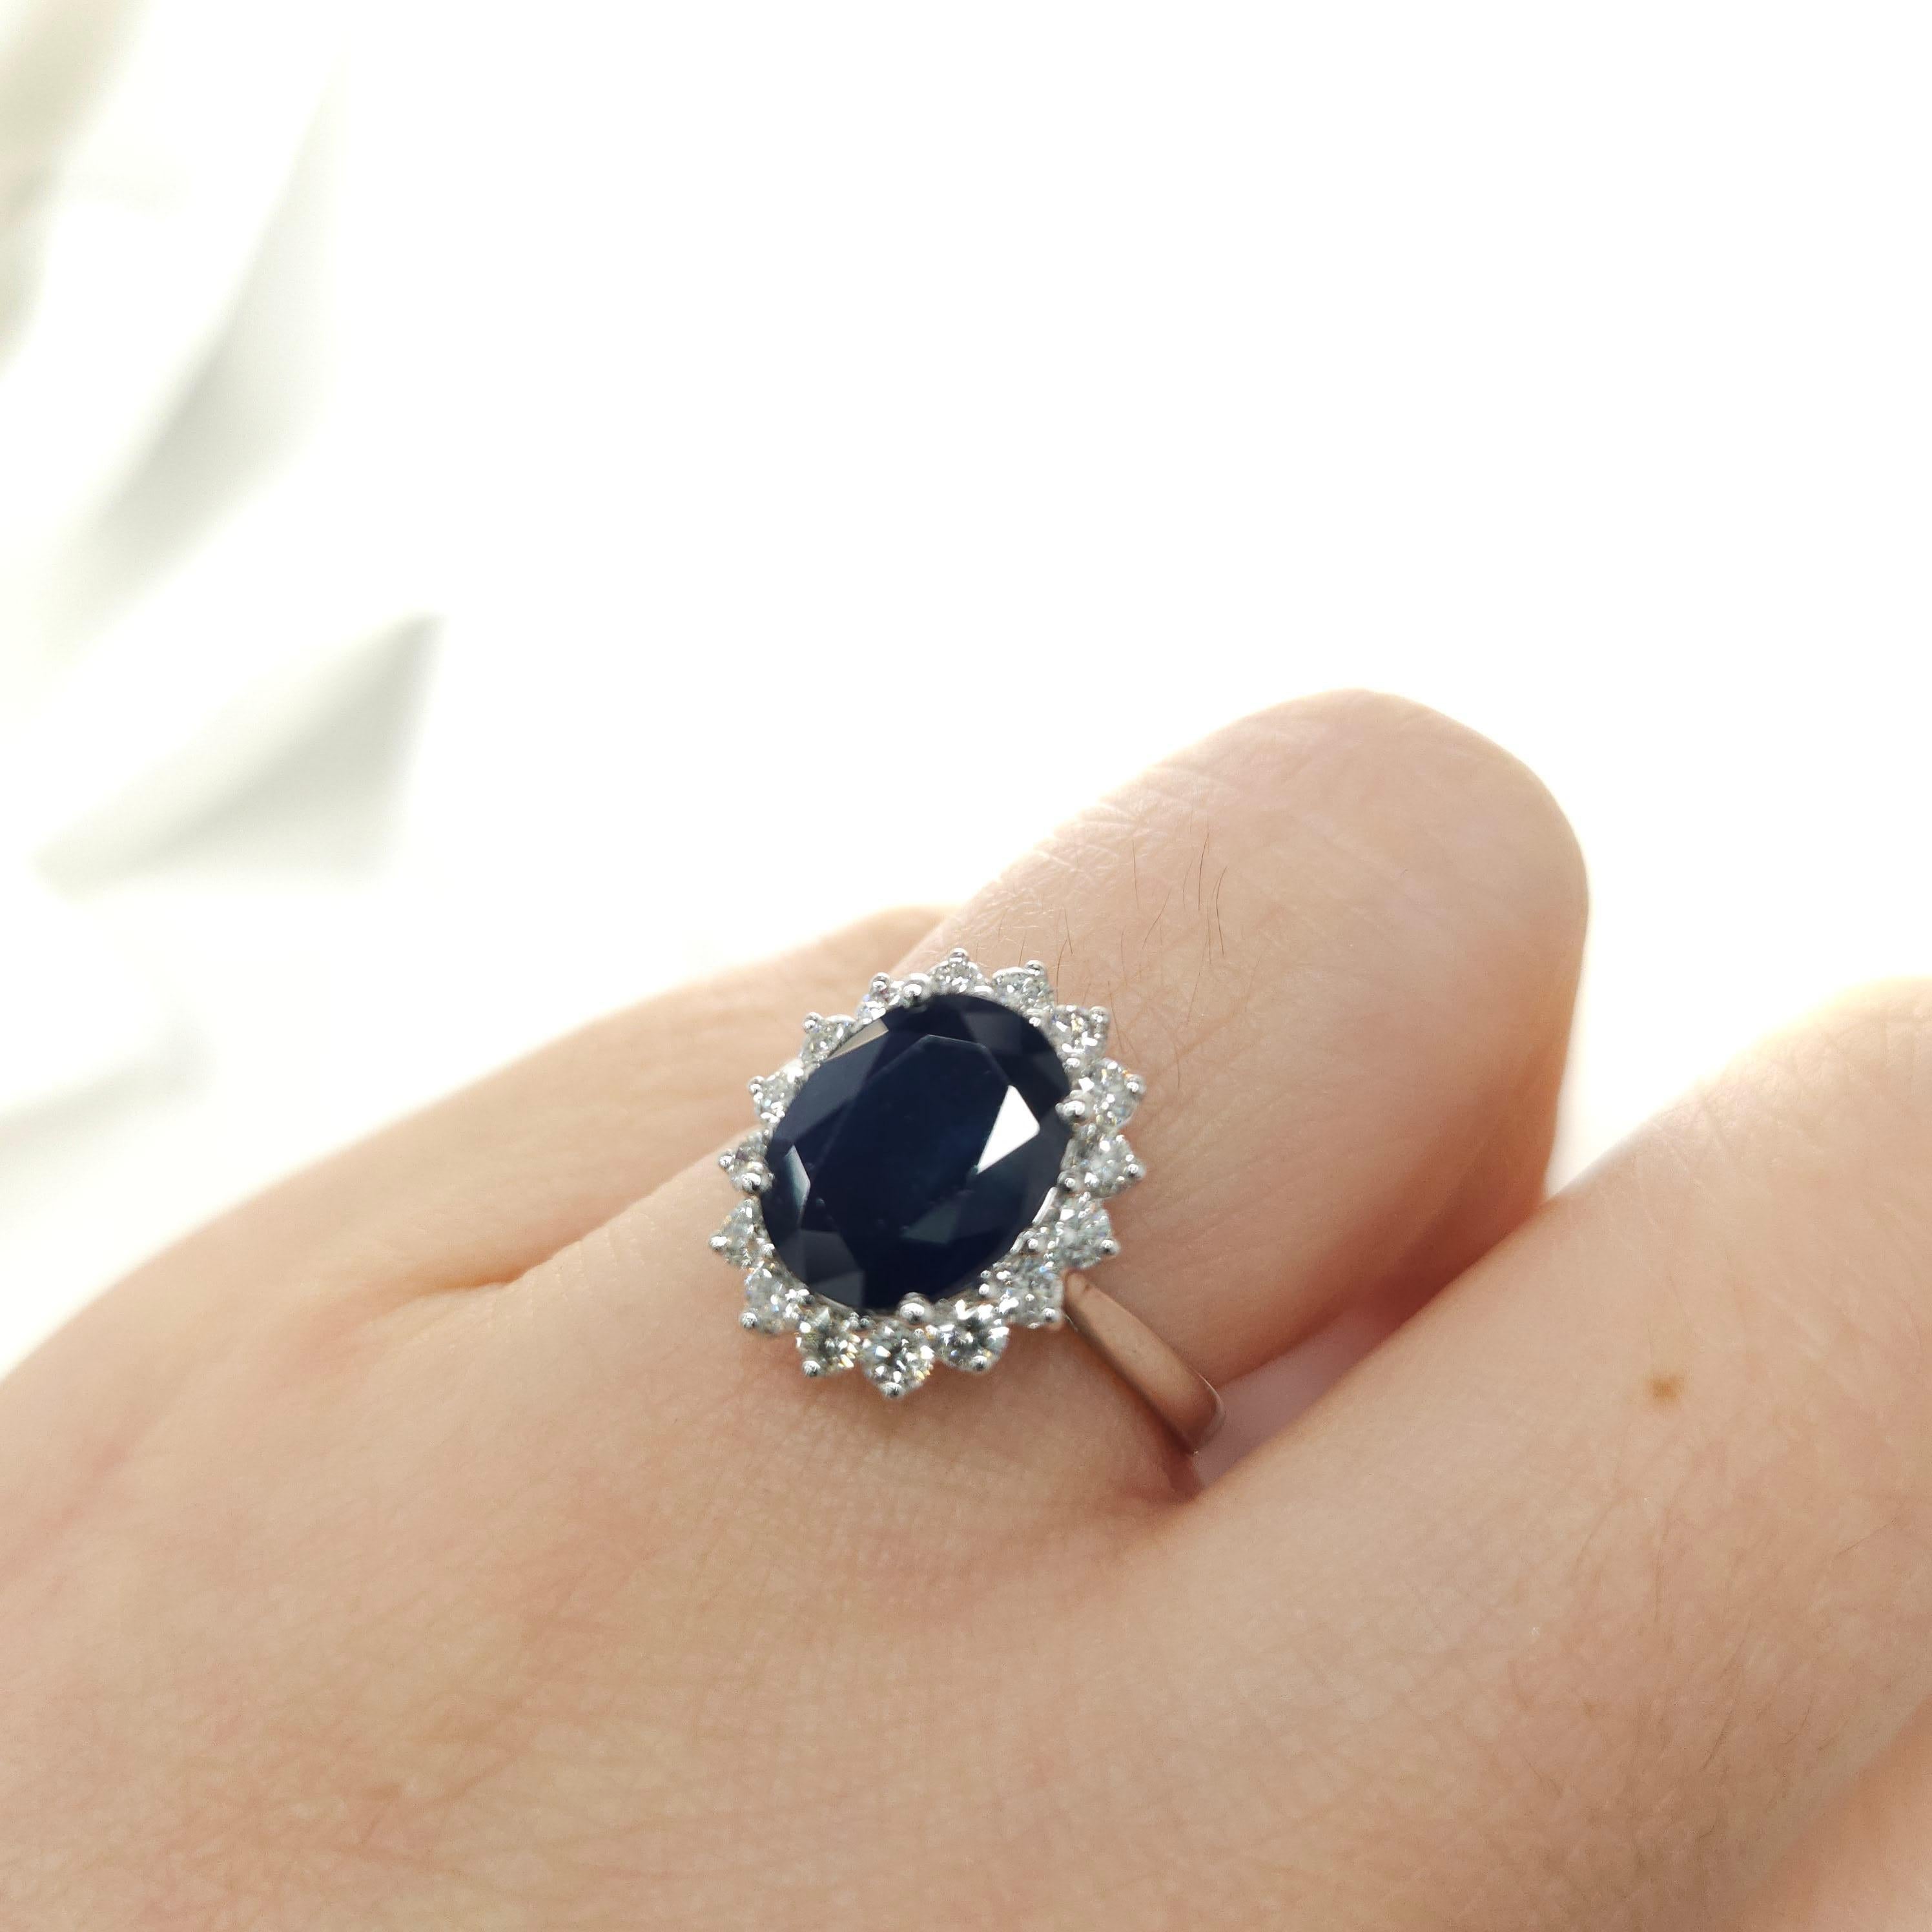 IGI Certified 2.90 Carat Blue Sapphire & Diamond Ring in 18K White Gold For Sale 1